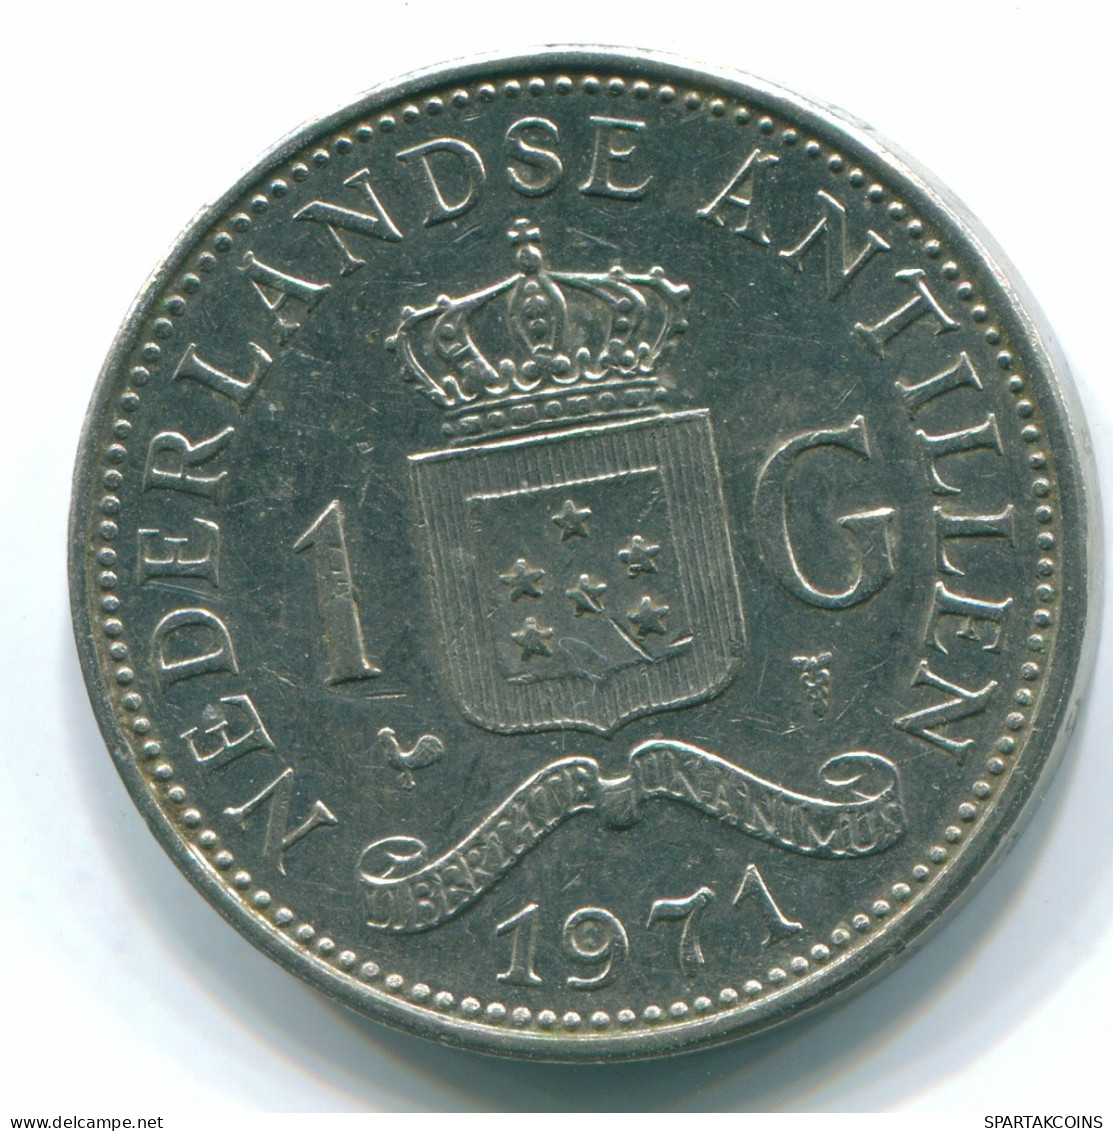 1 GULDEN 1971 ANTILLES NÉERLANDAISES Nickel Colonial Pièce #S11983.F.A - Netherlands Antilles